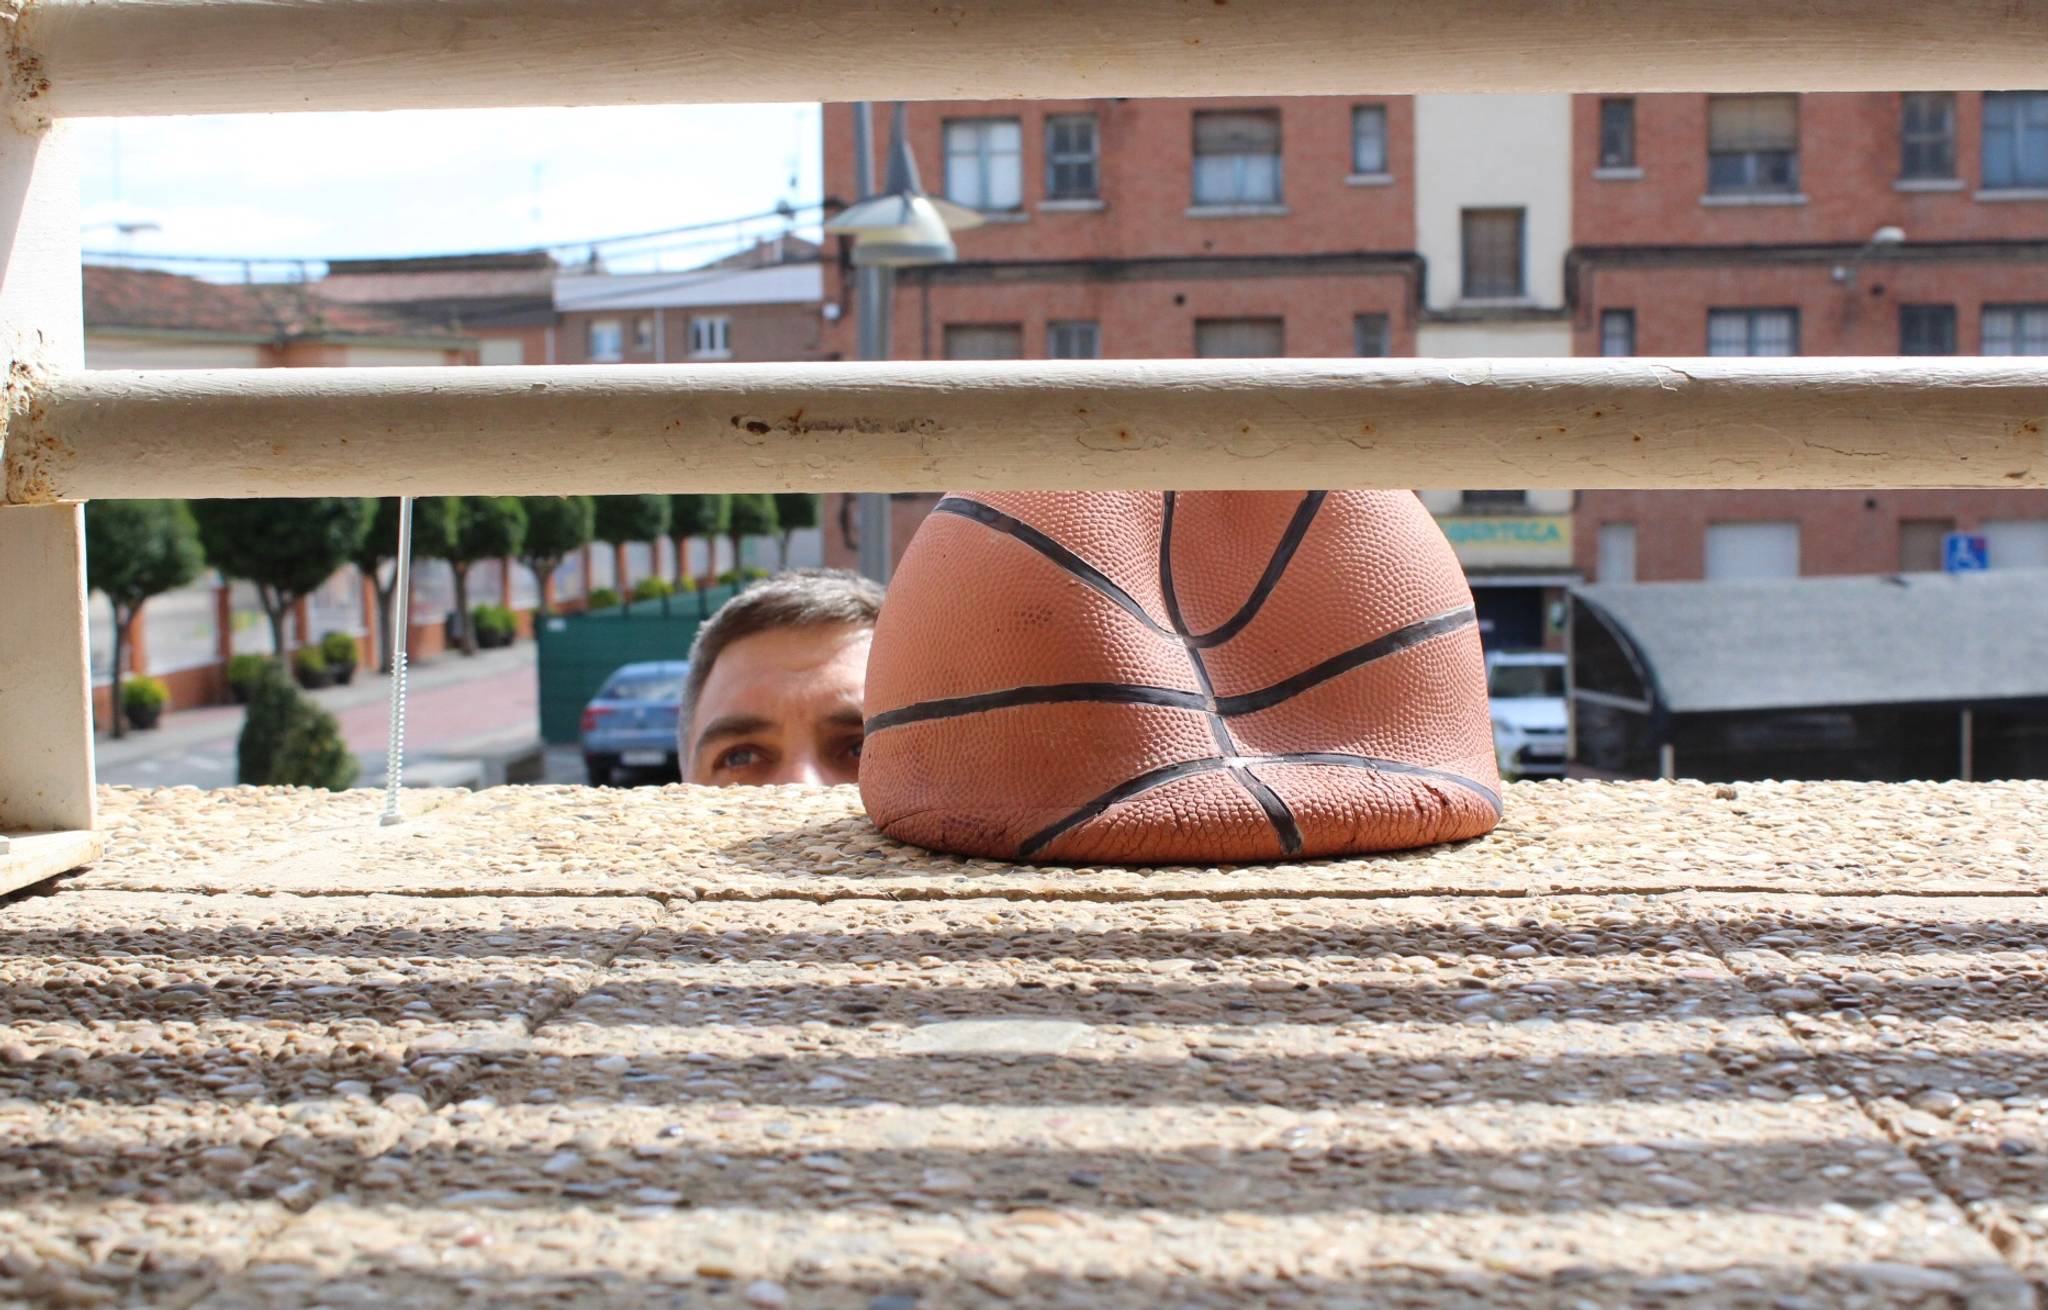 Miguel Ángel Carretero&mdash;basket ball / pelota de baloncesto